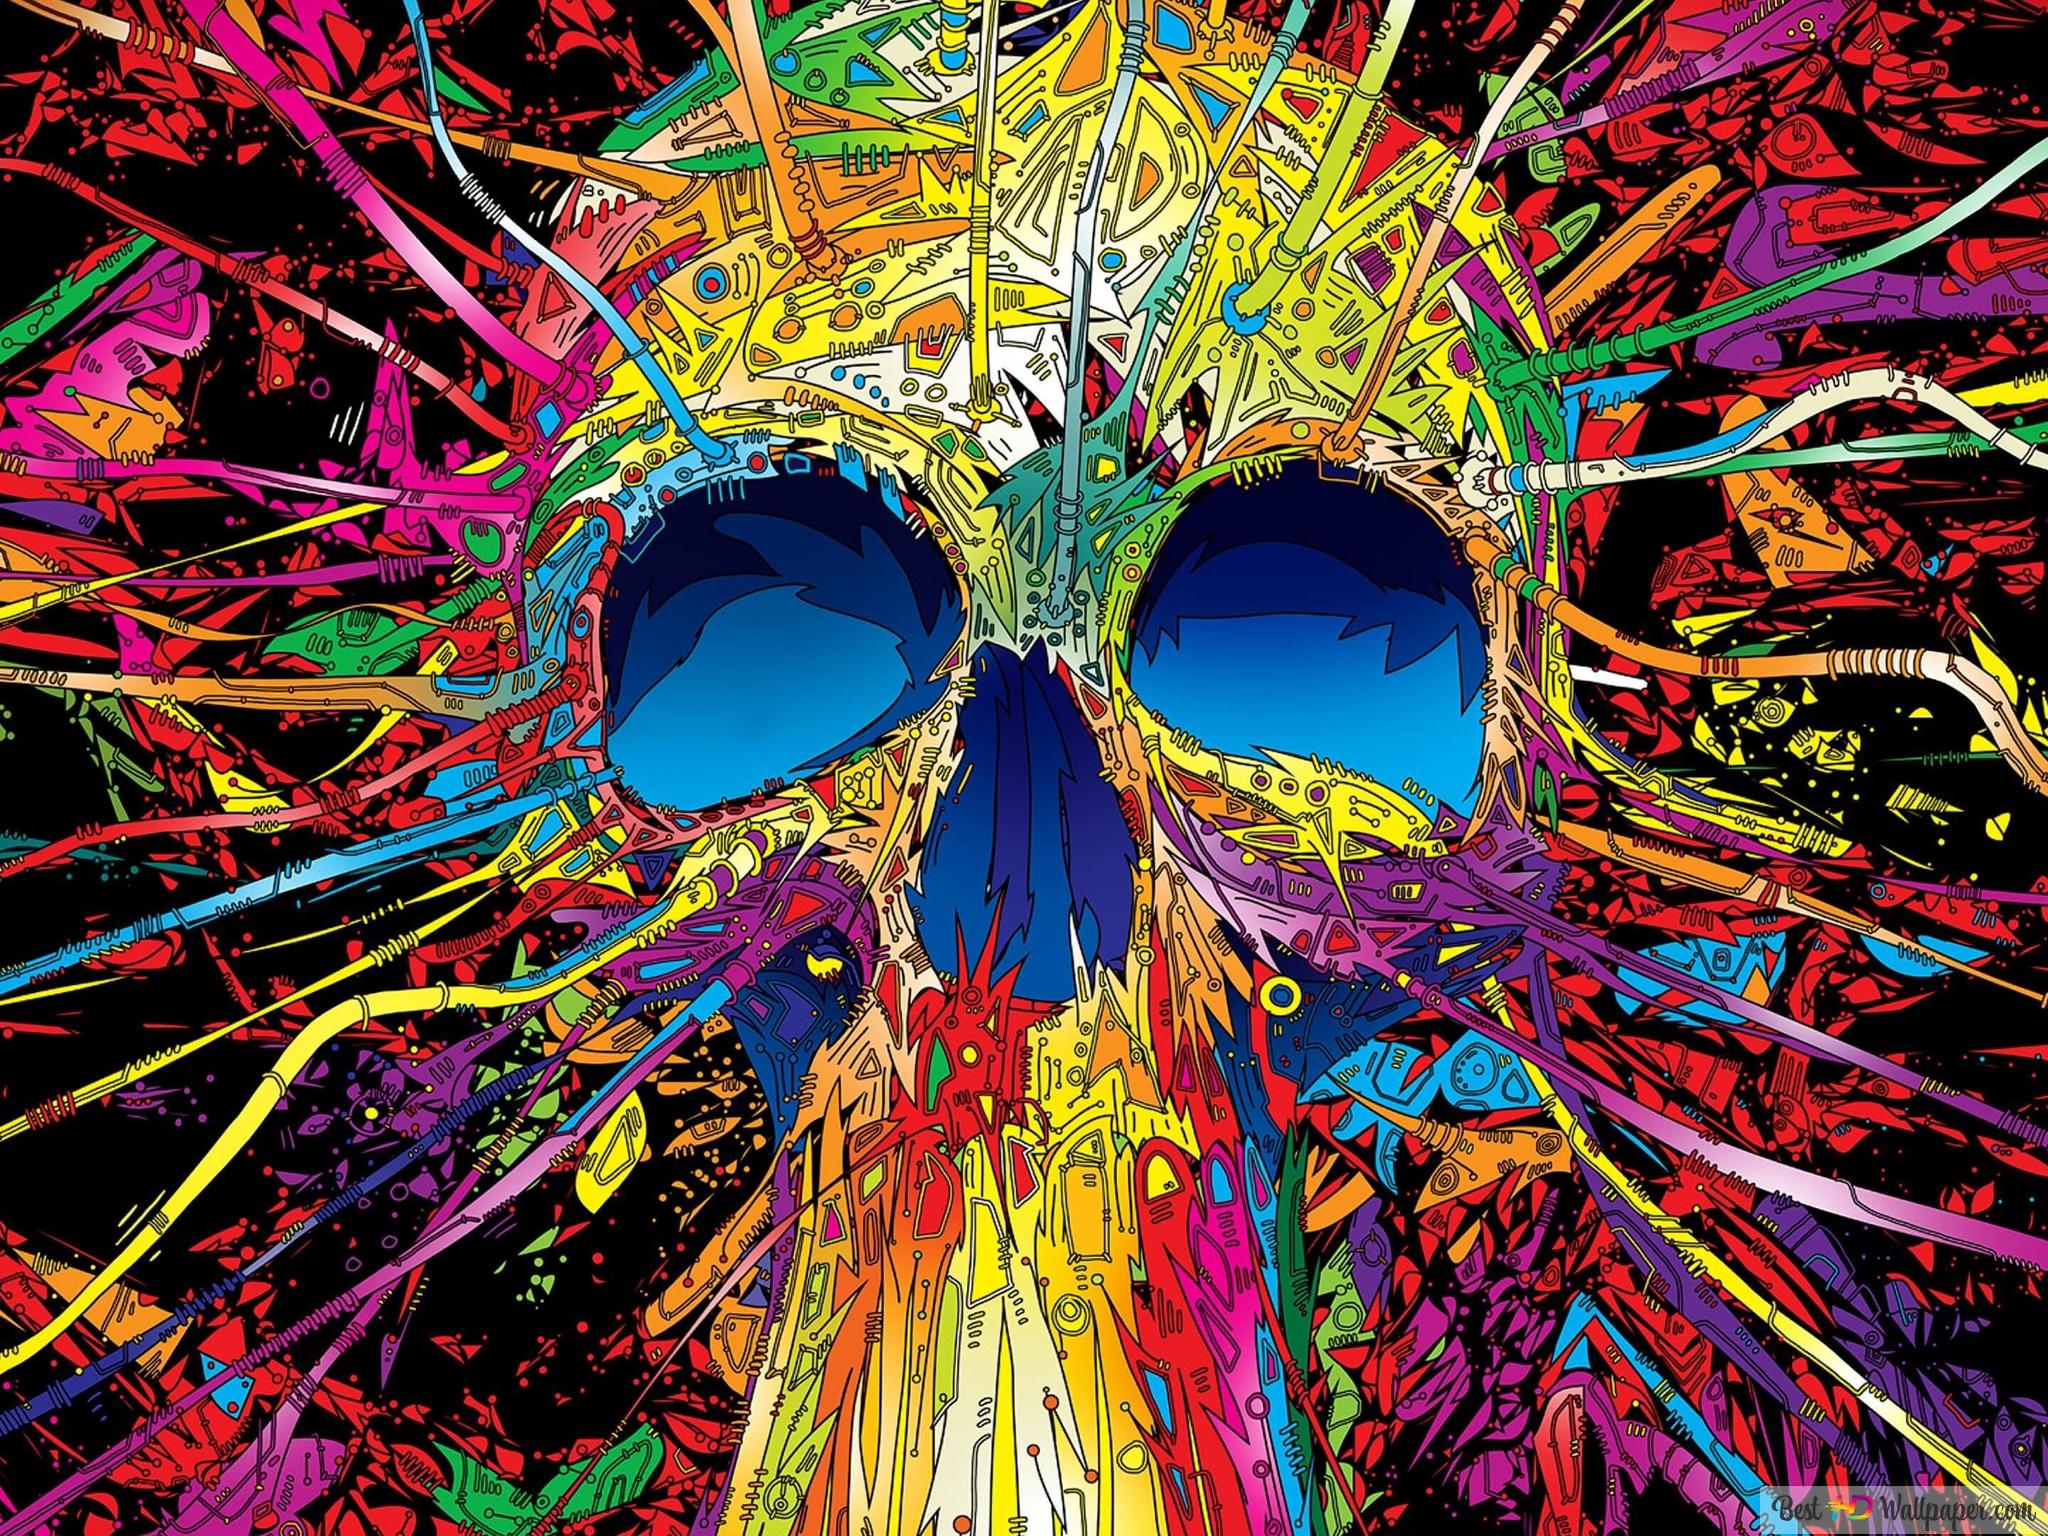 Psychedelic Skull 4K wallpaper download